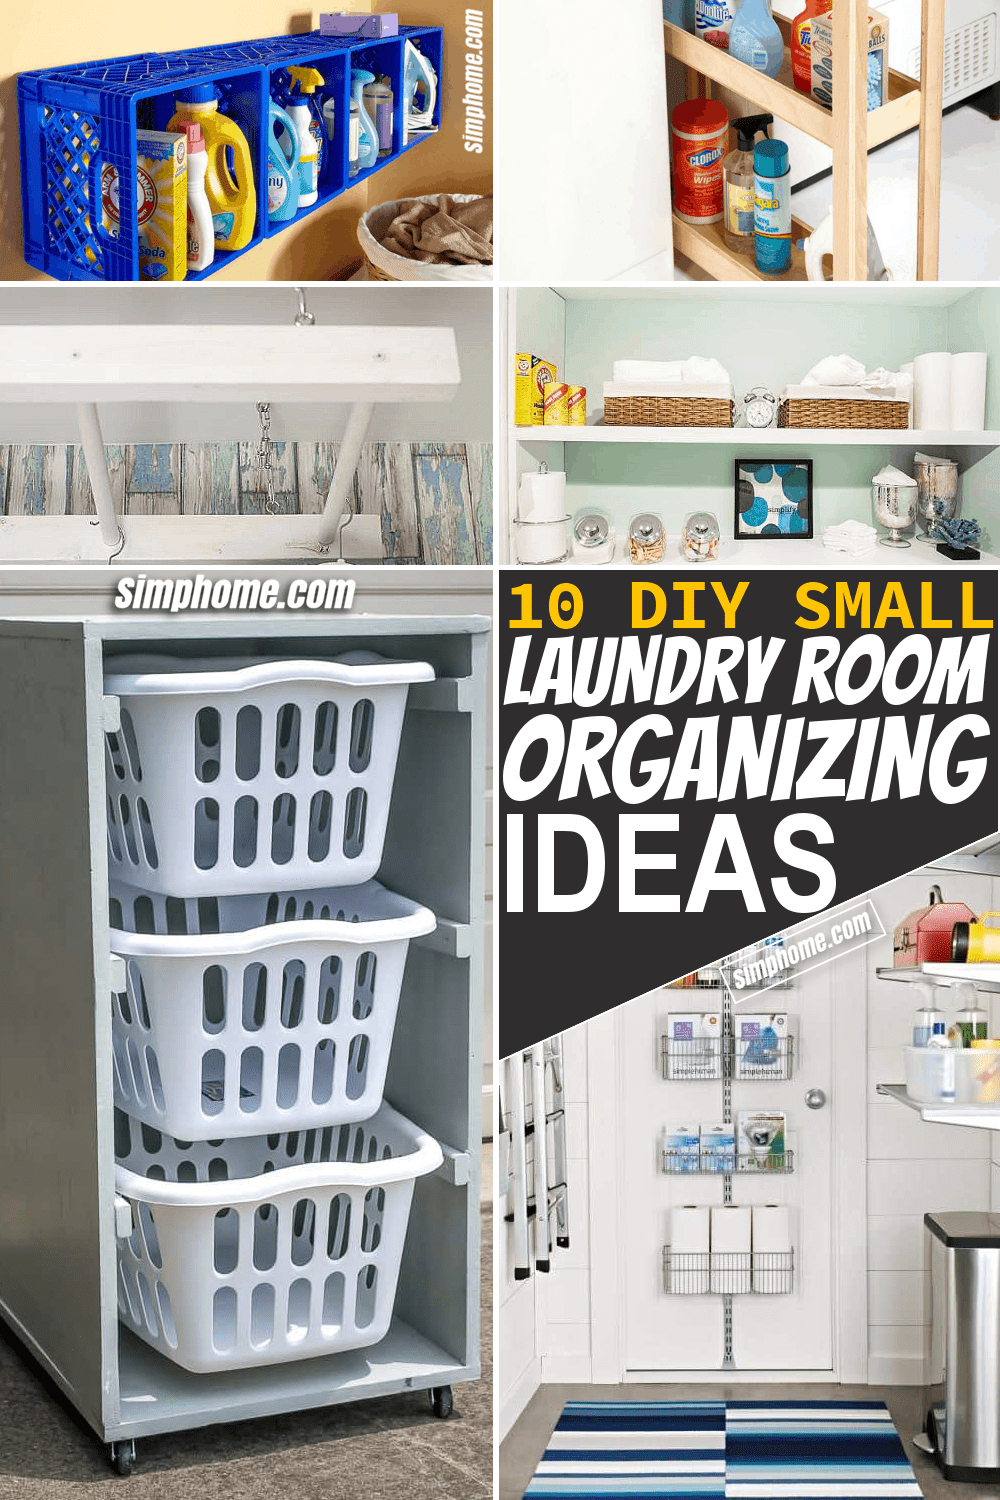 Simphome.com 10 Small Laundry Room Organization Ideas Pinterest Long